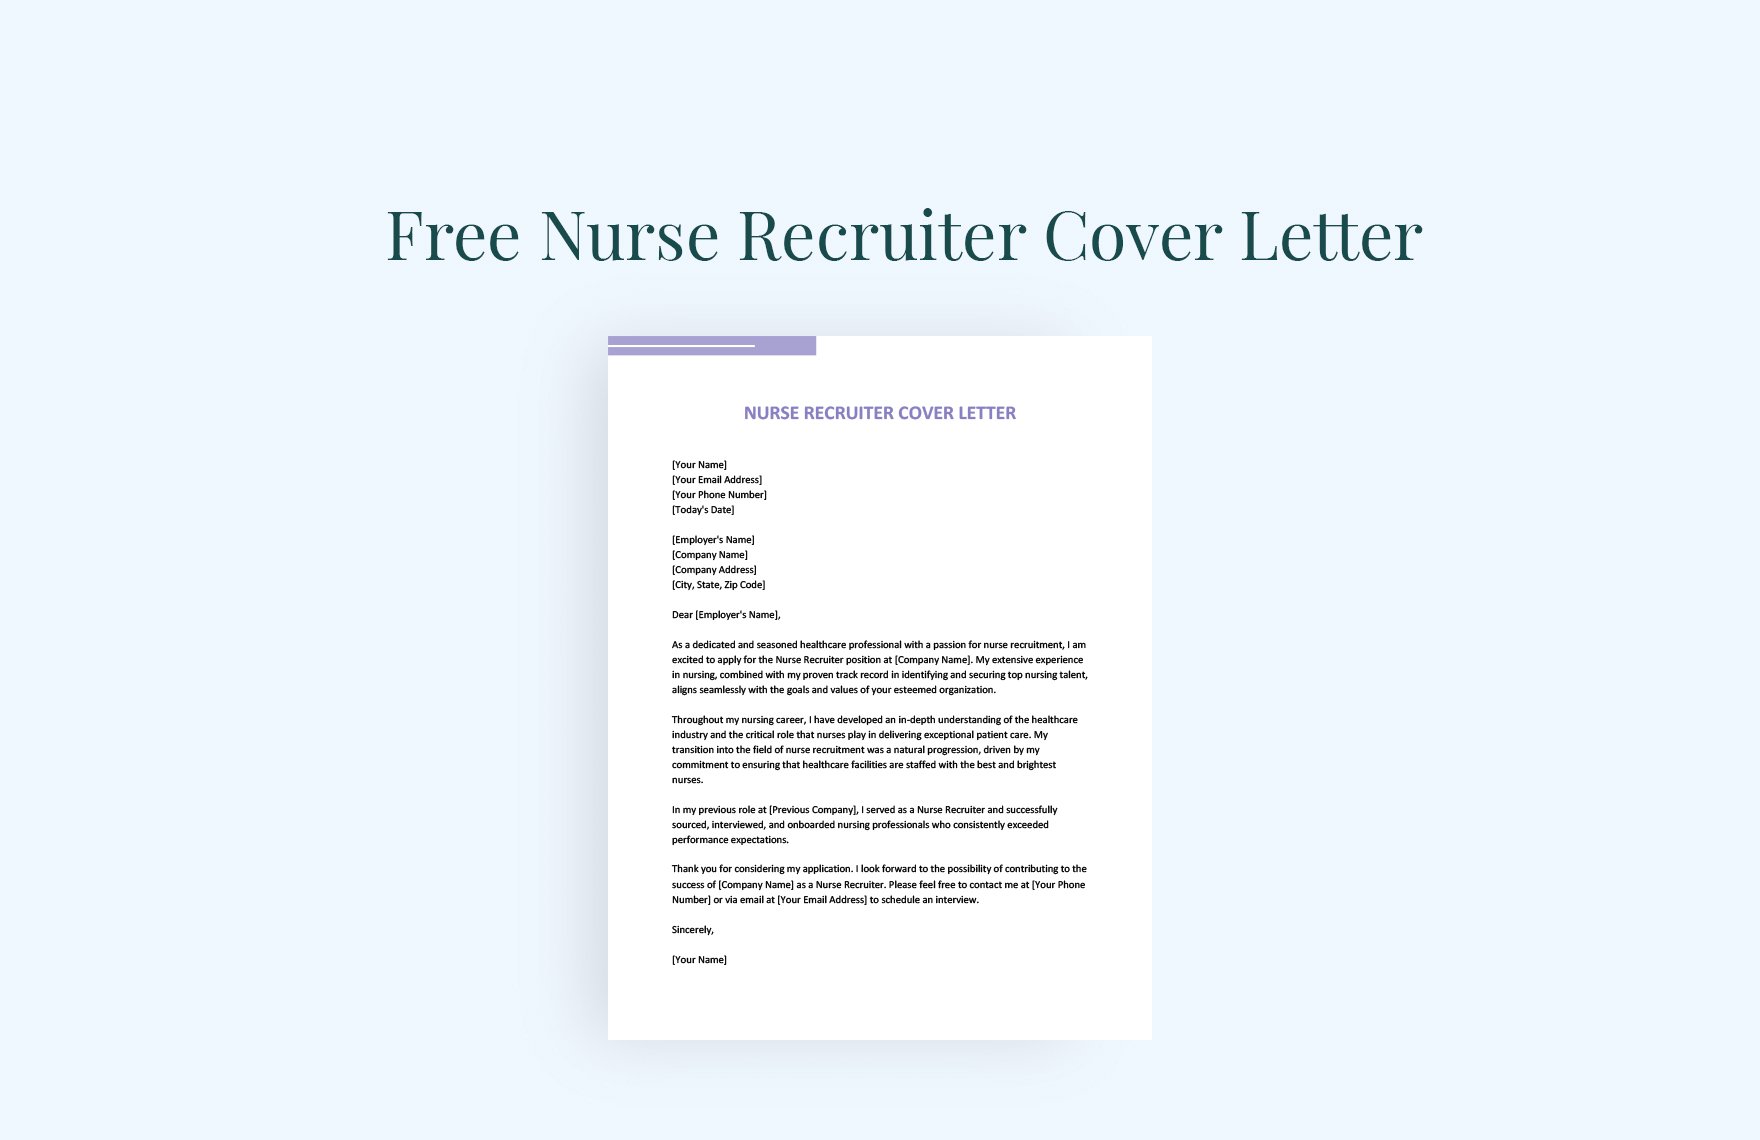 Nurse Recruiter Cover Letter in Word, Google Docs